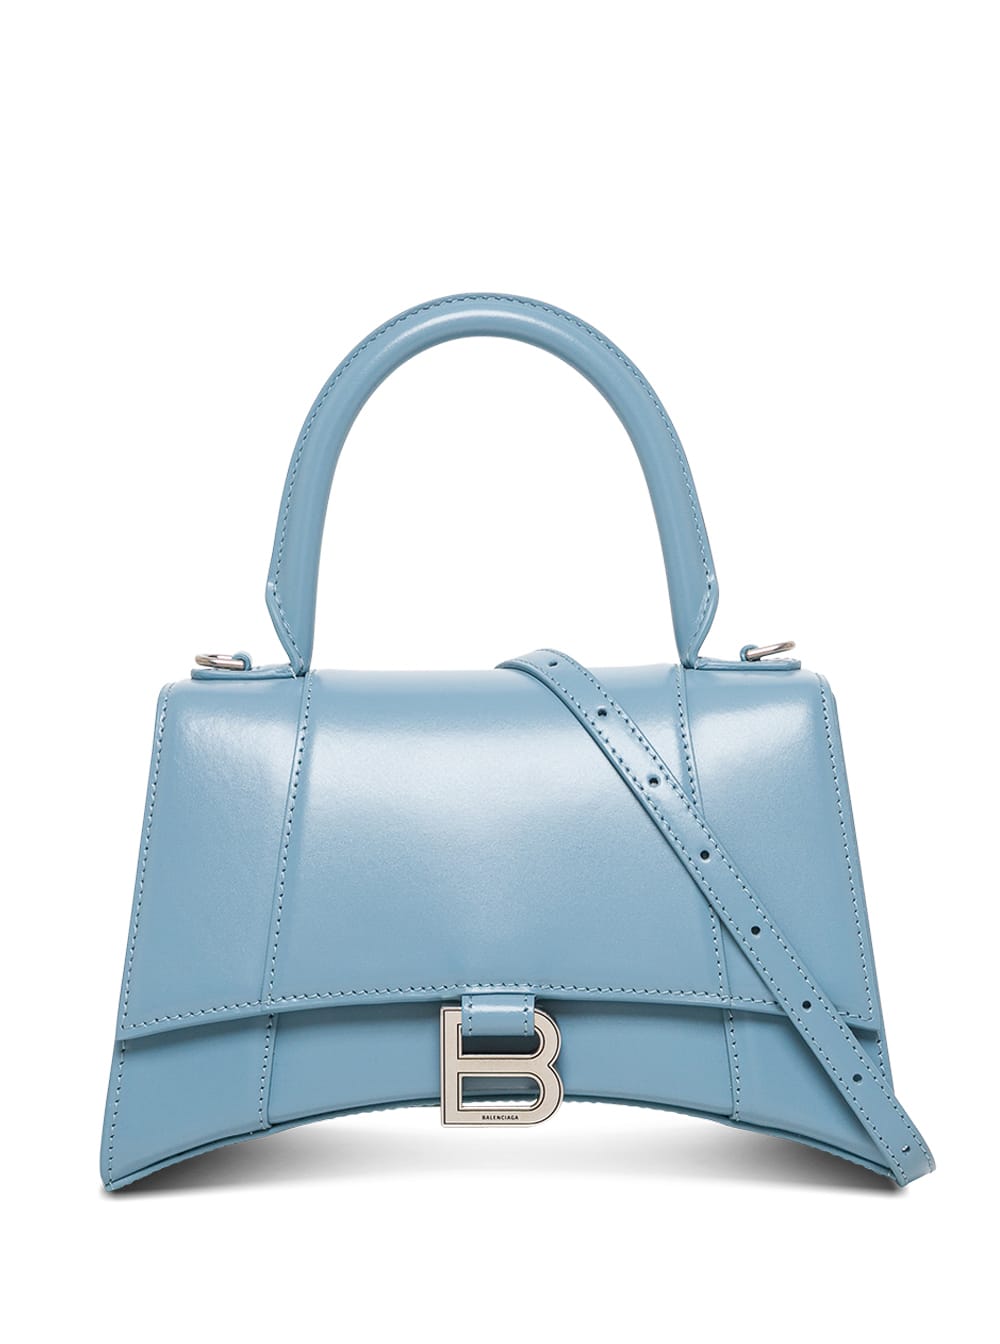 Balenciaga Hourglass Handbag In Light Blue Leather